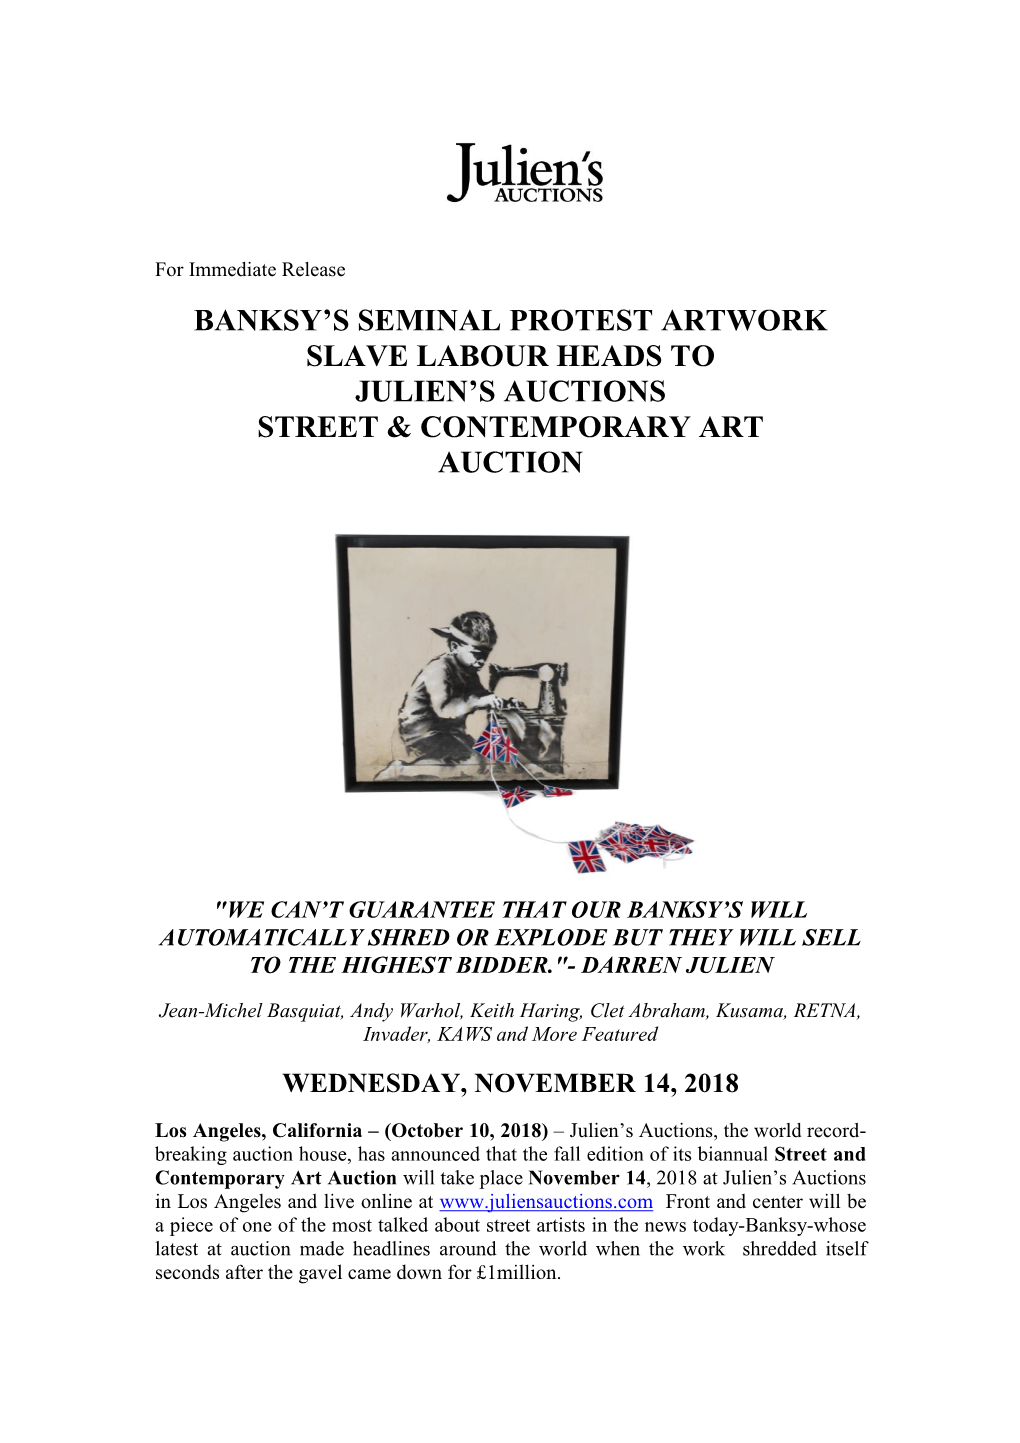 Banksy's Seminal Protest Artwork Slave Labour Heads to Julien's Auctions